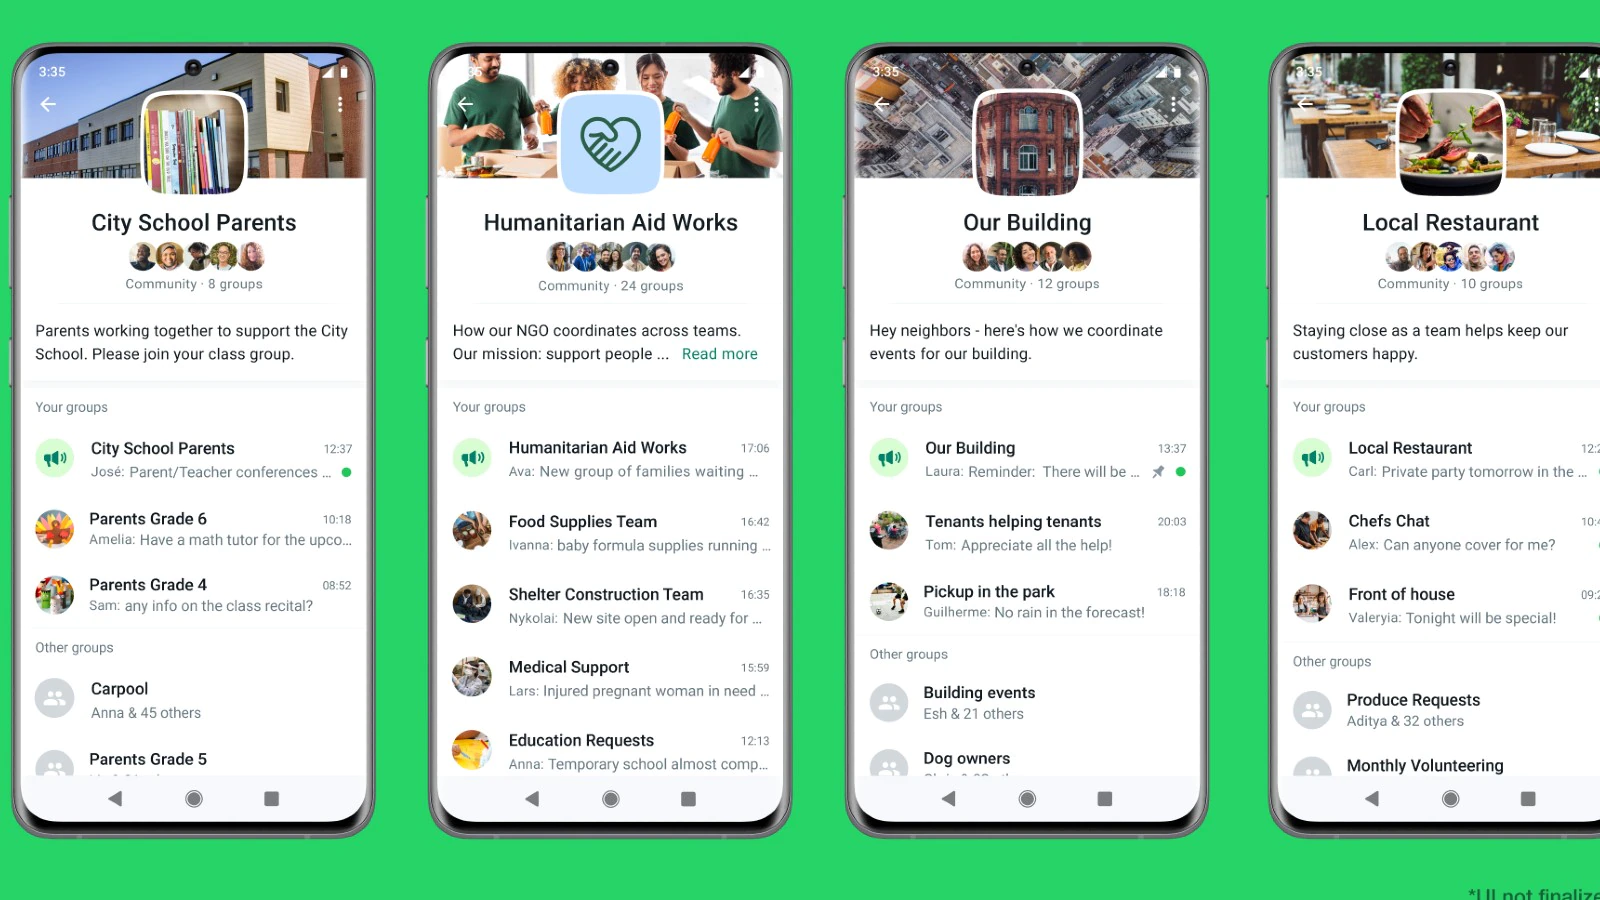 WhatsApp Reveals New Event Organization Feature for Communities